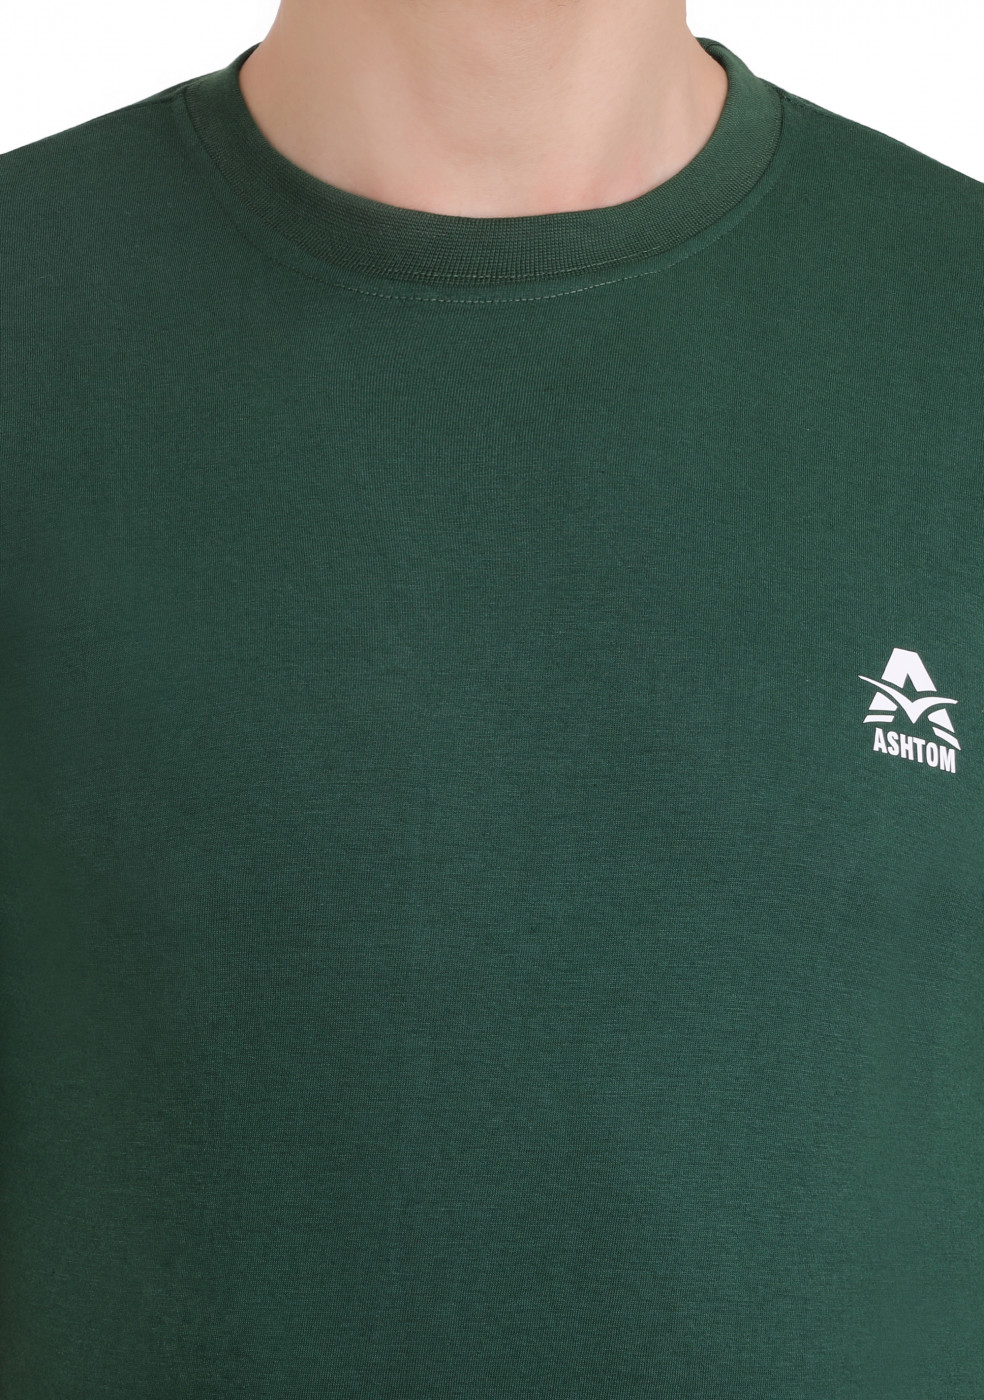 Green Cotton Round Neck T Shirt For Men